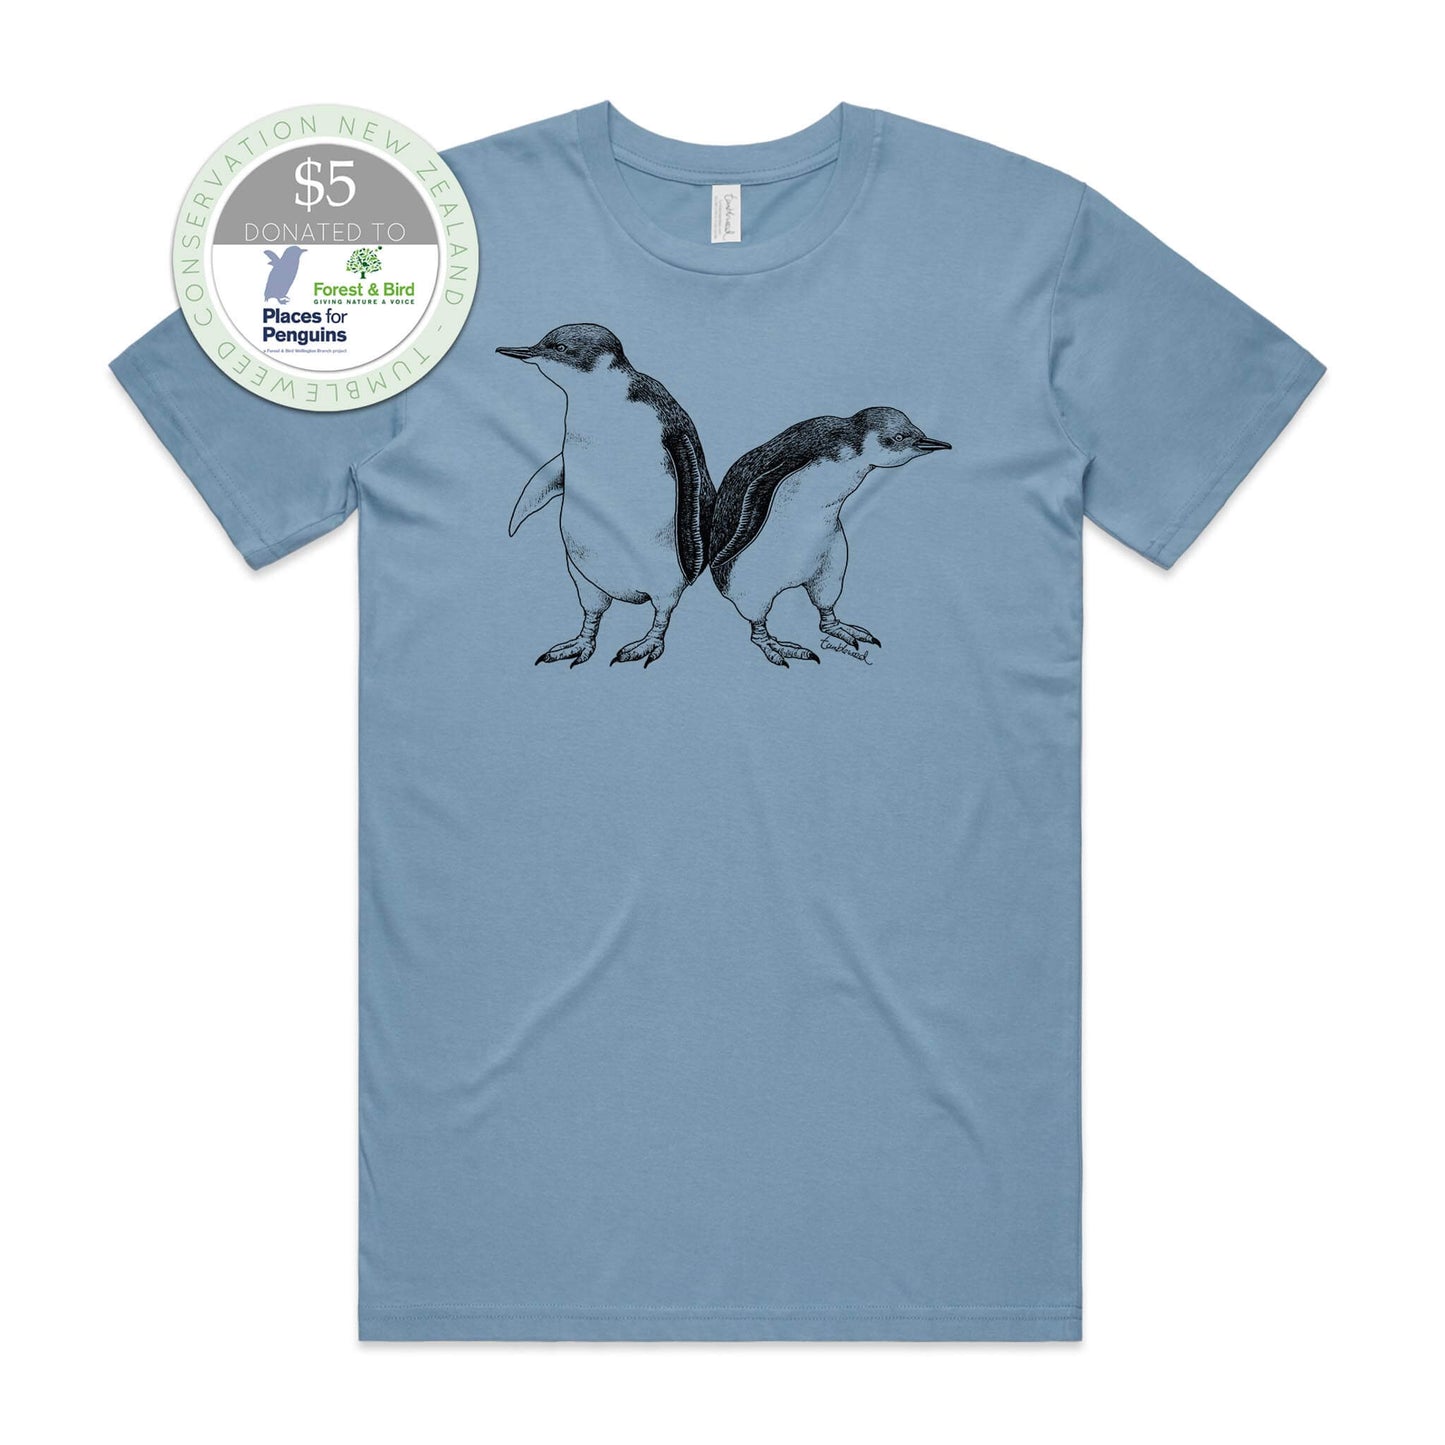 Sage, female t-shirt featuring a screen printed Little Blue Penguin design.